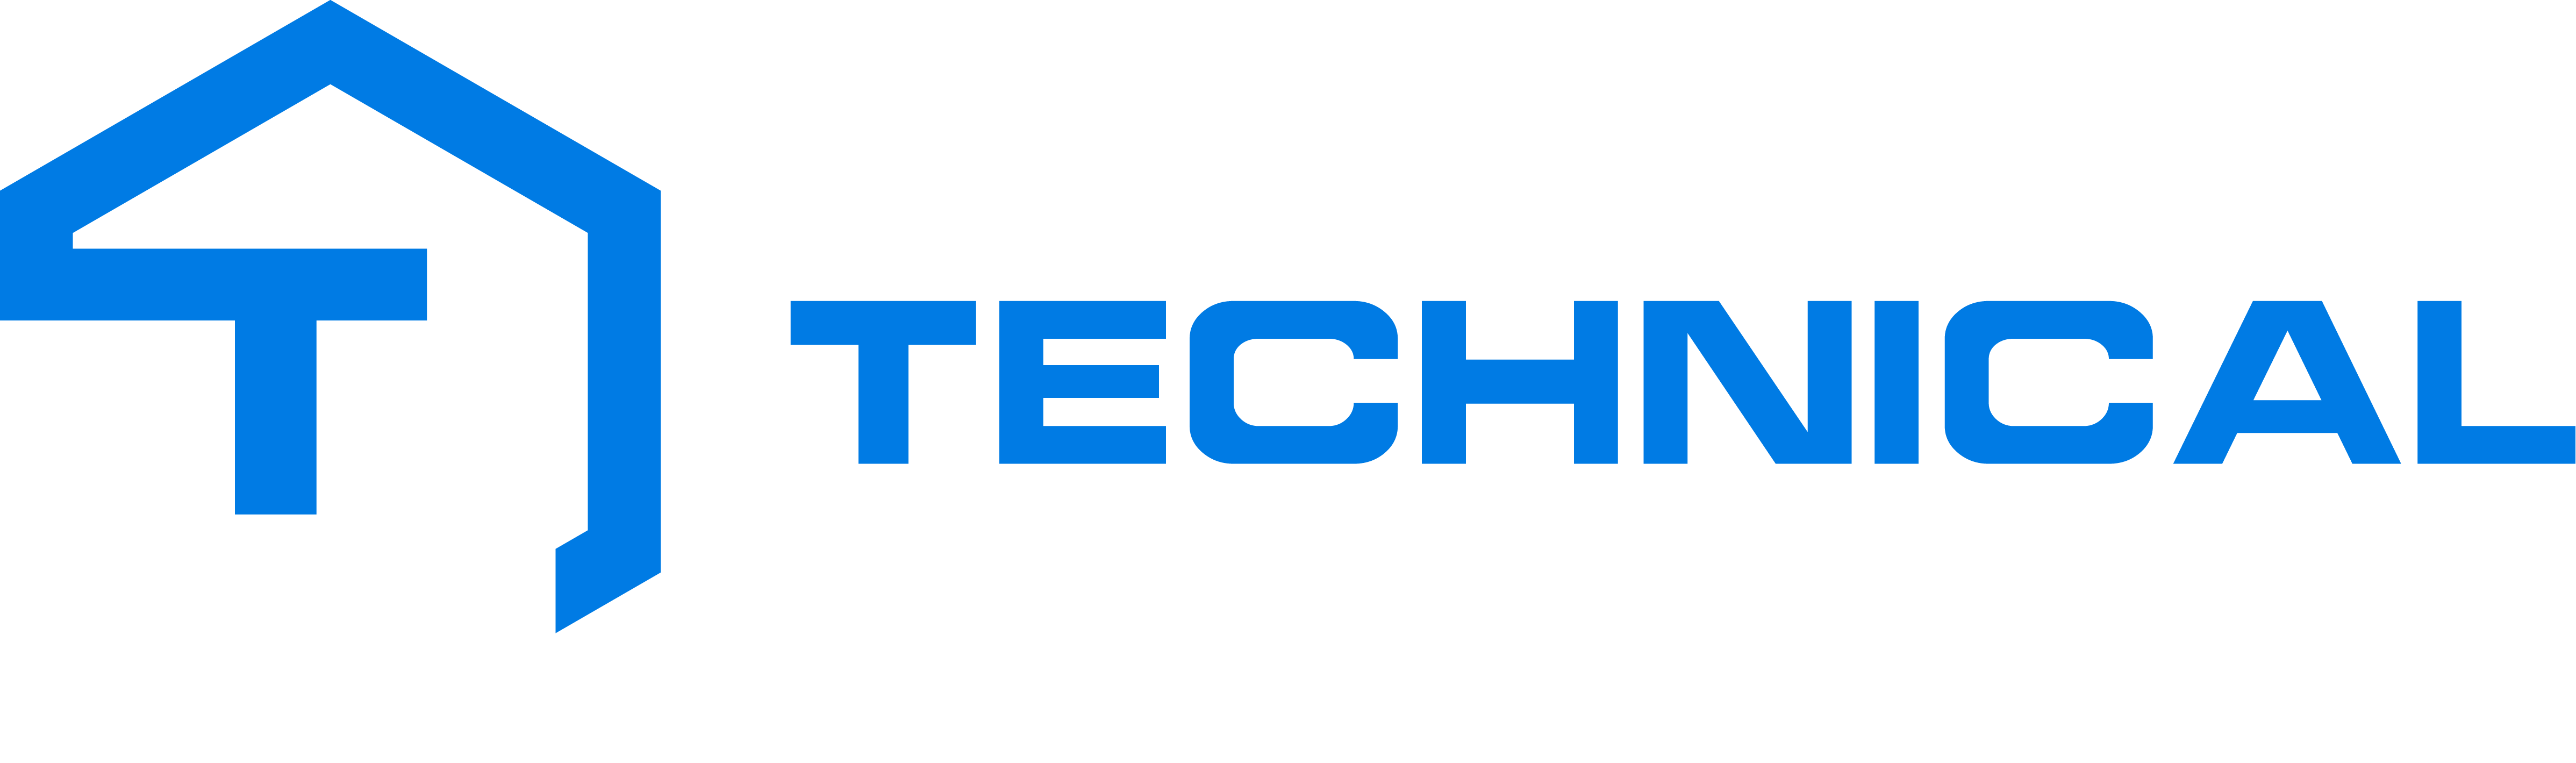 Technical Insulation Europe logo